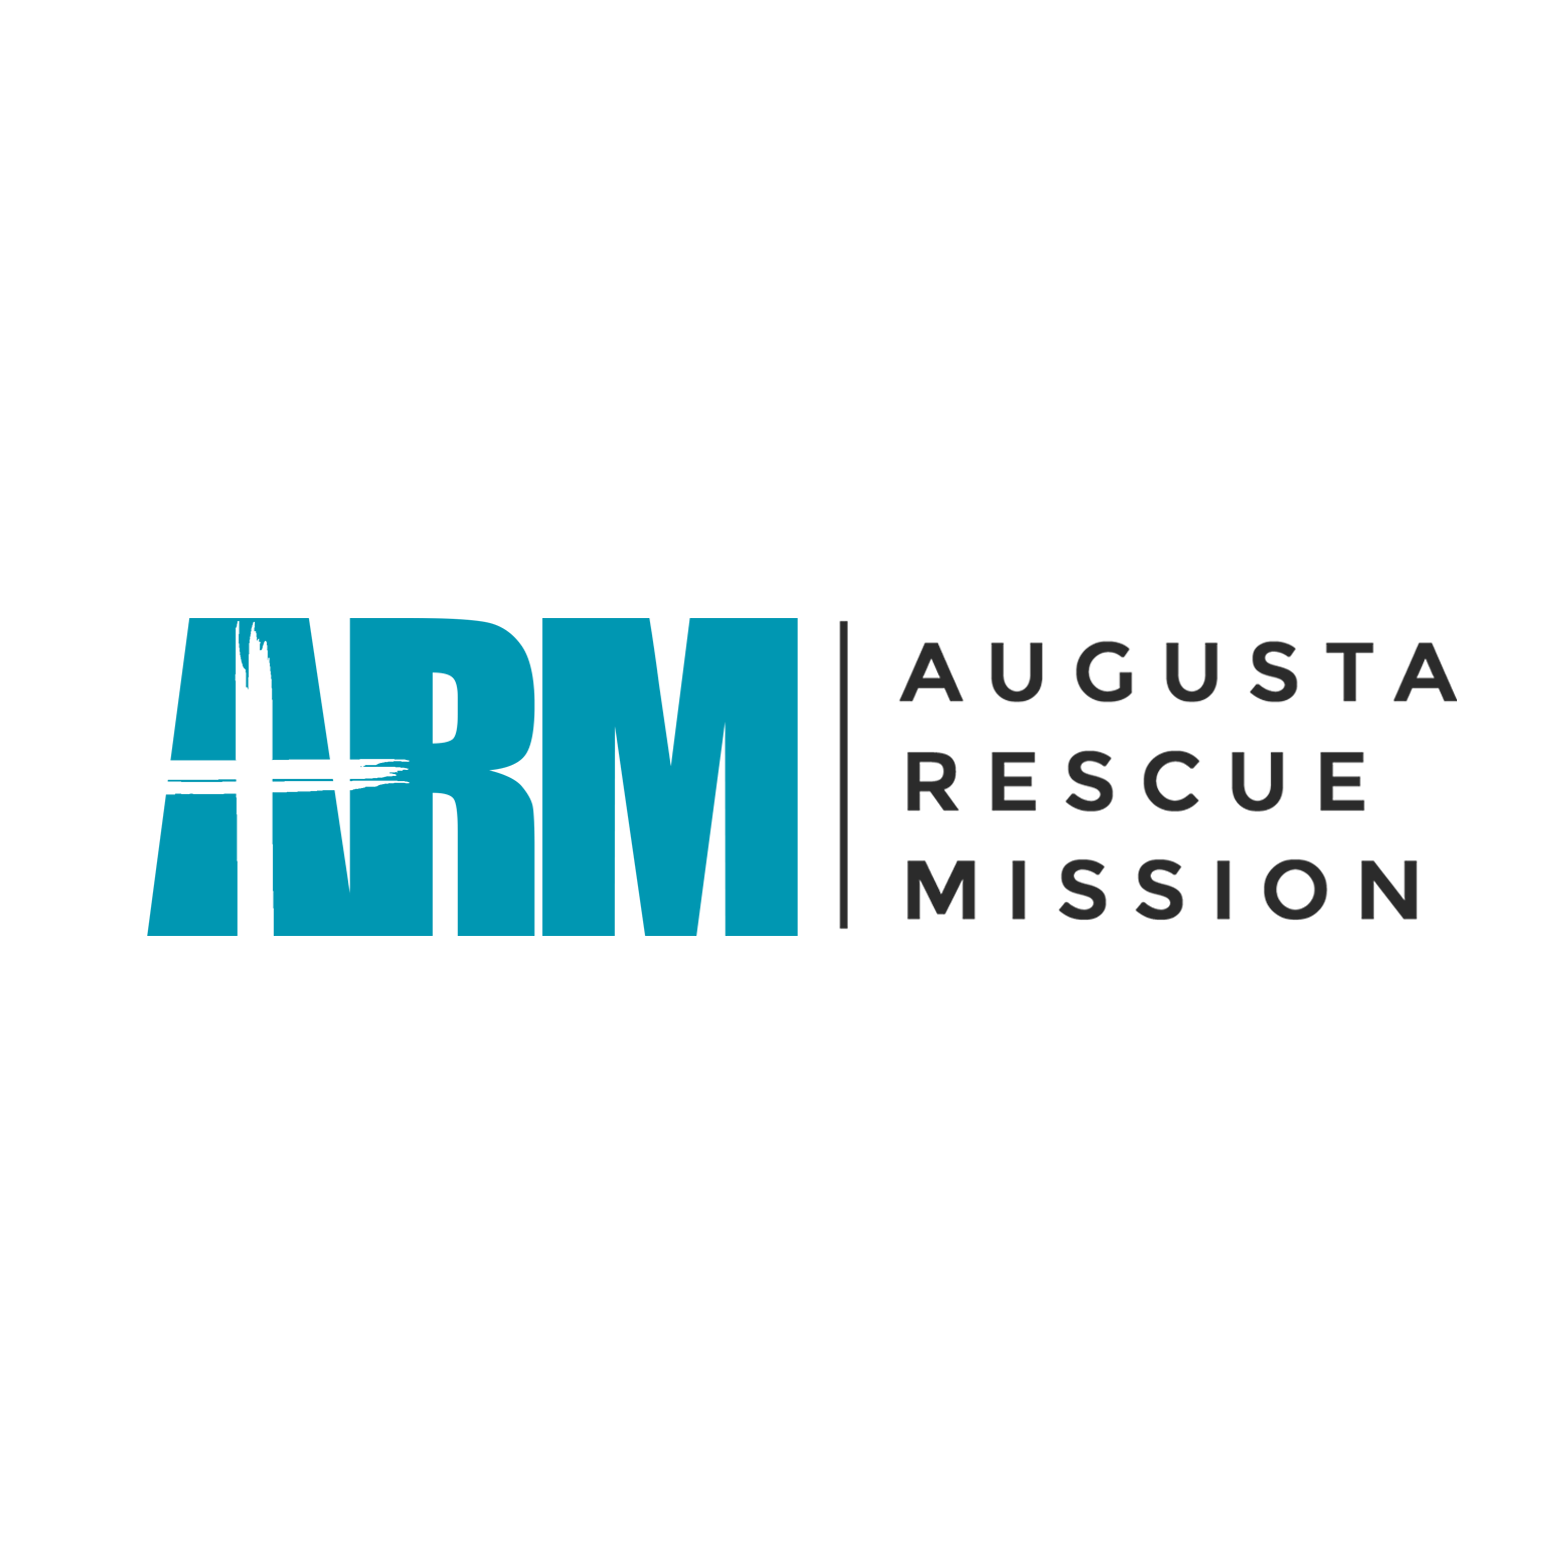 Augusta Rescue Mission